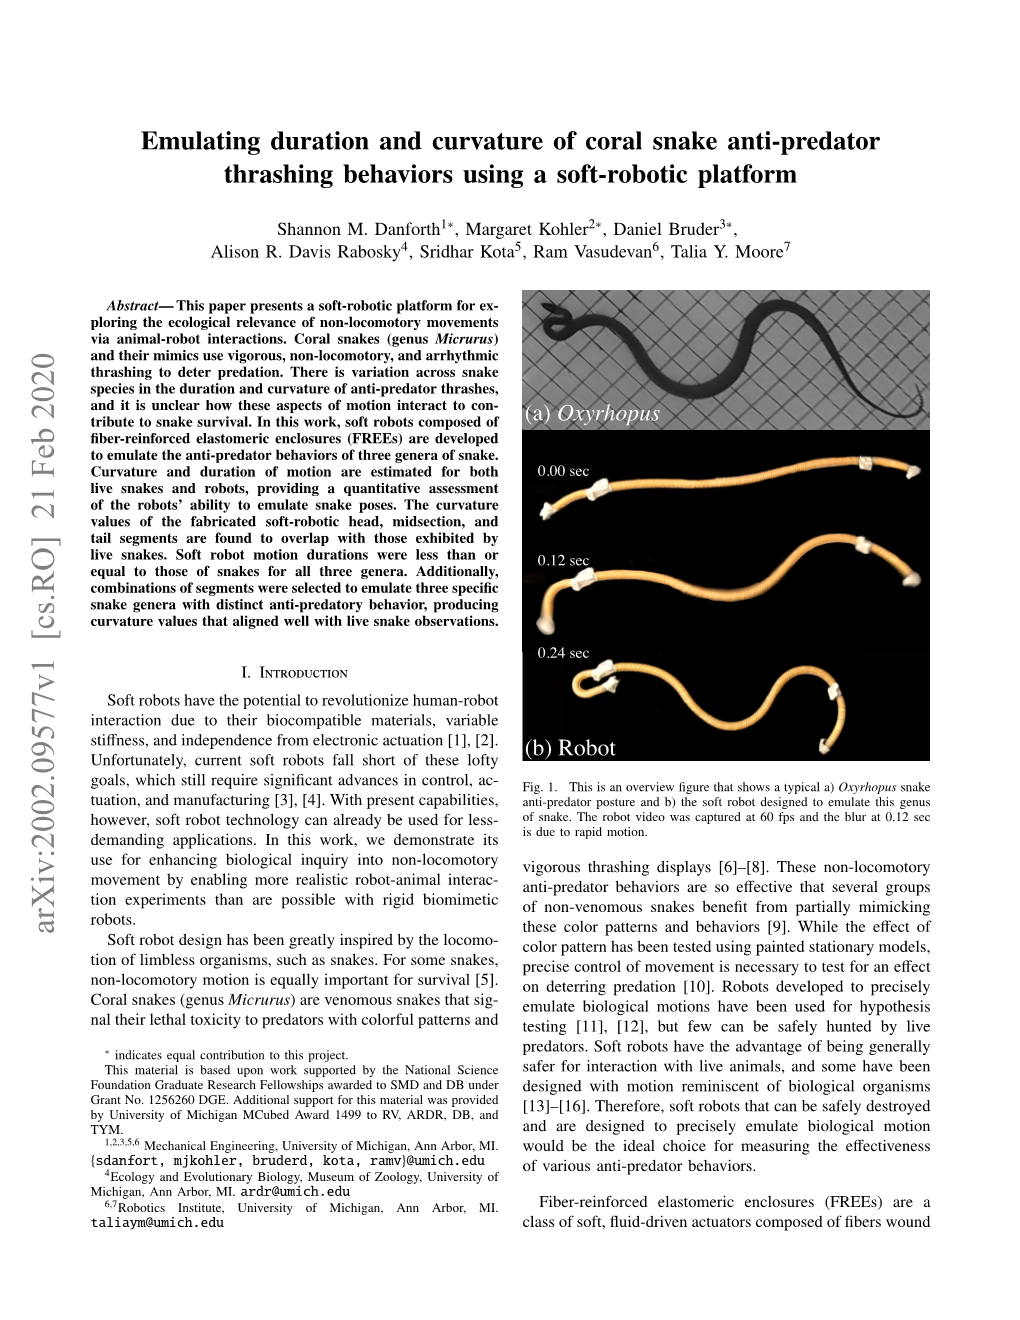 Emulating Duration and Curvature of Coral Snake Anti-Predator Thrashing Behaviors Using a Soft-Robotic Platform